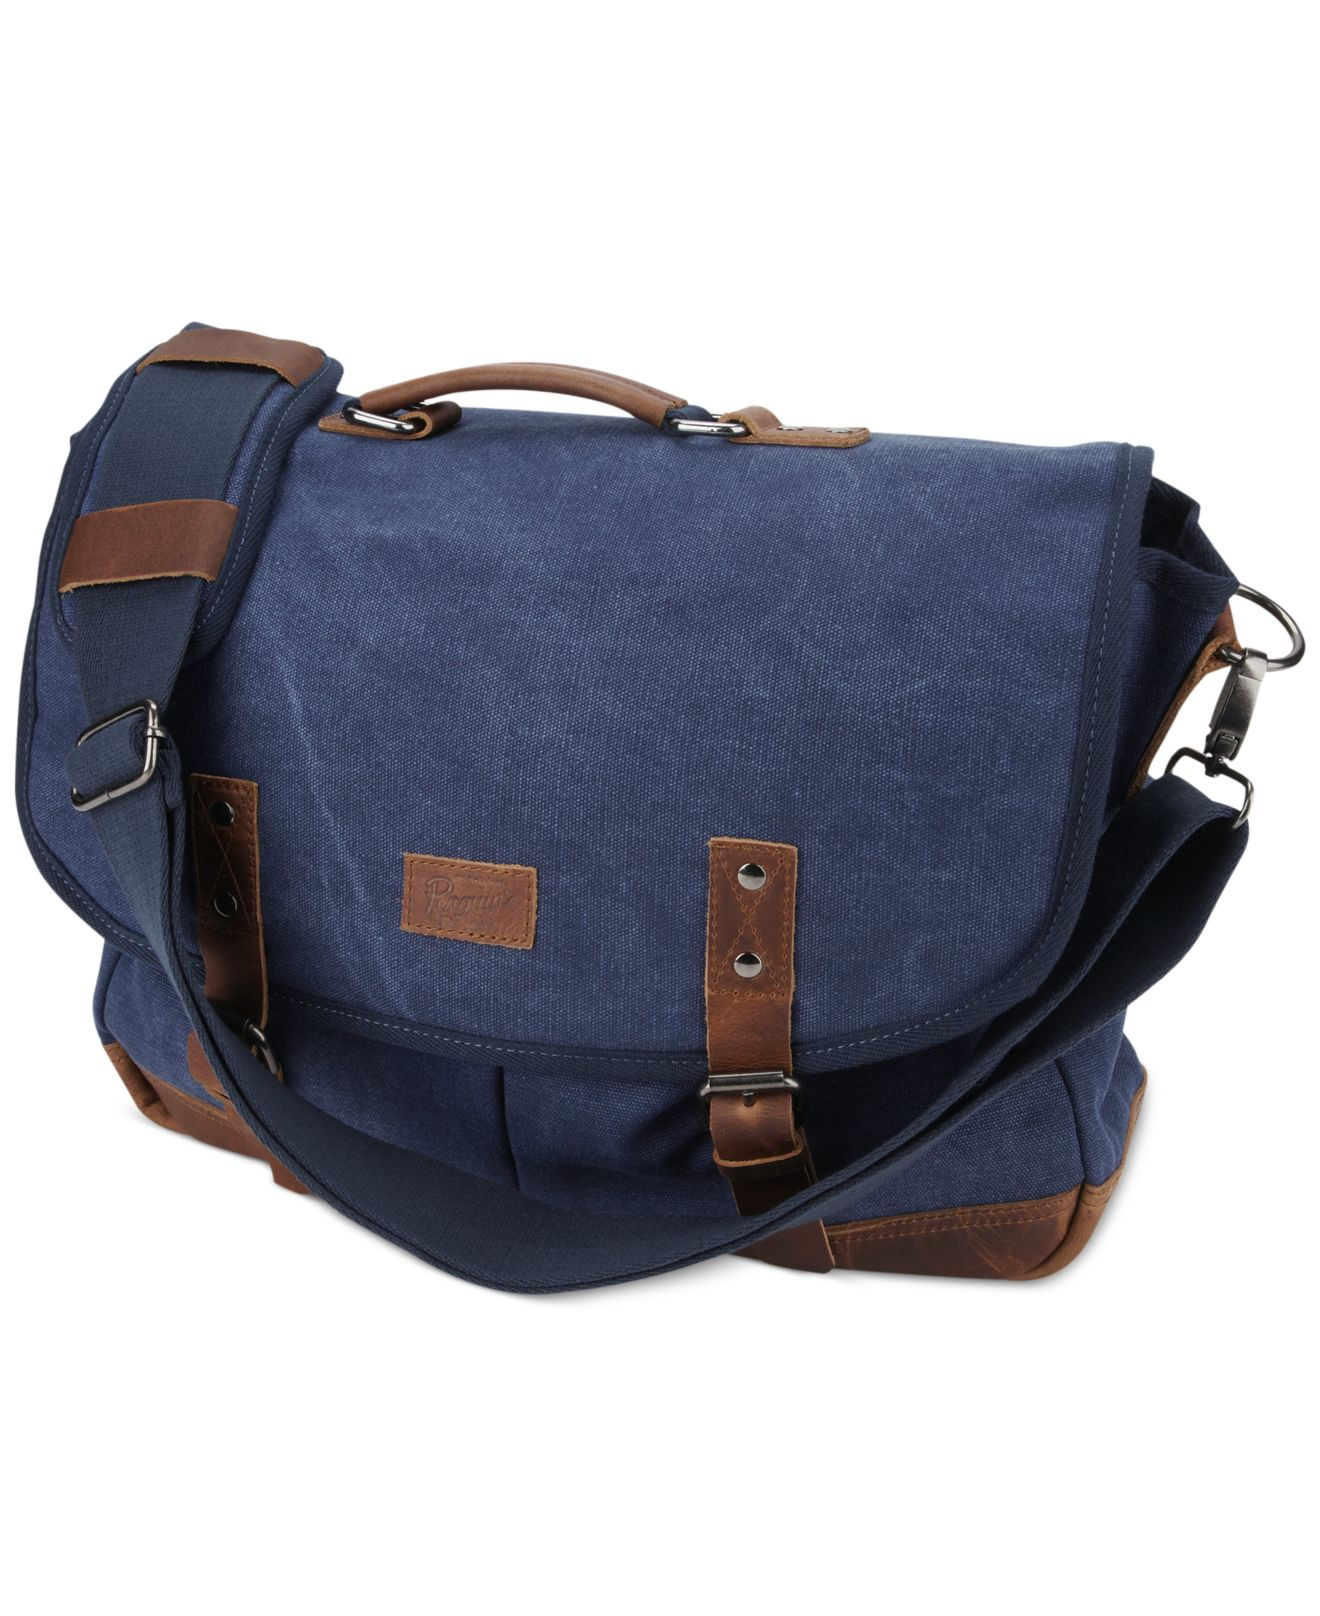 Lyst - Original Penguin Messenger Bag in Blue for Men